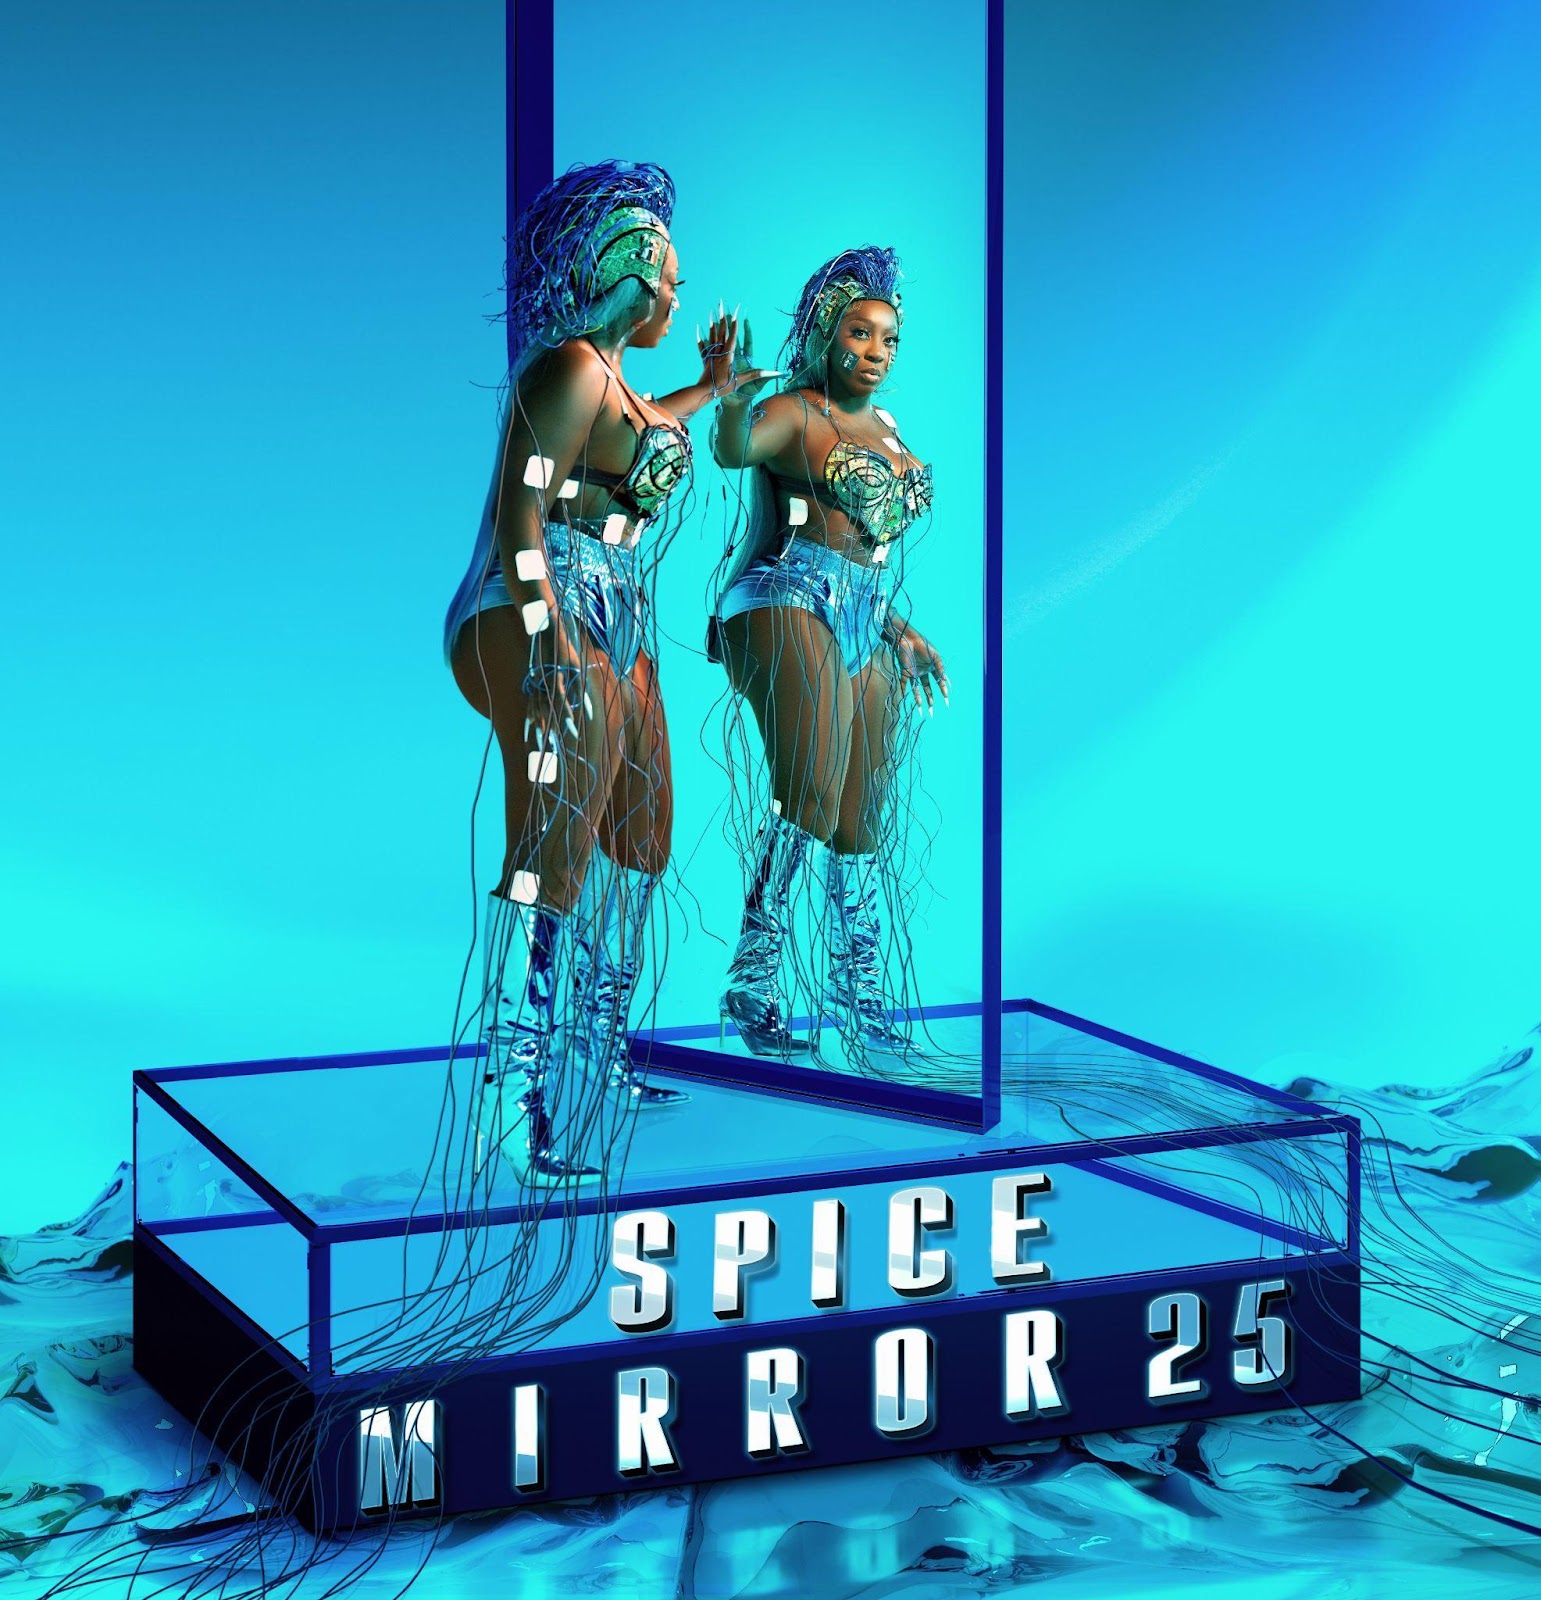 SPICE DROPS INTROSPECTIVE THIRD STUDIO ALBUM, ‘MIRROR 25’